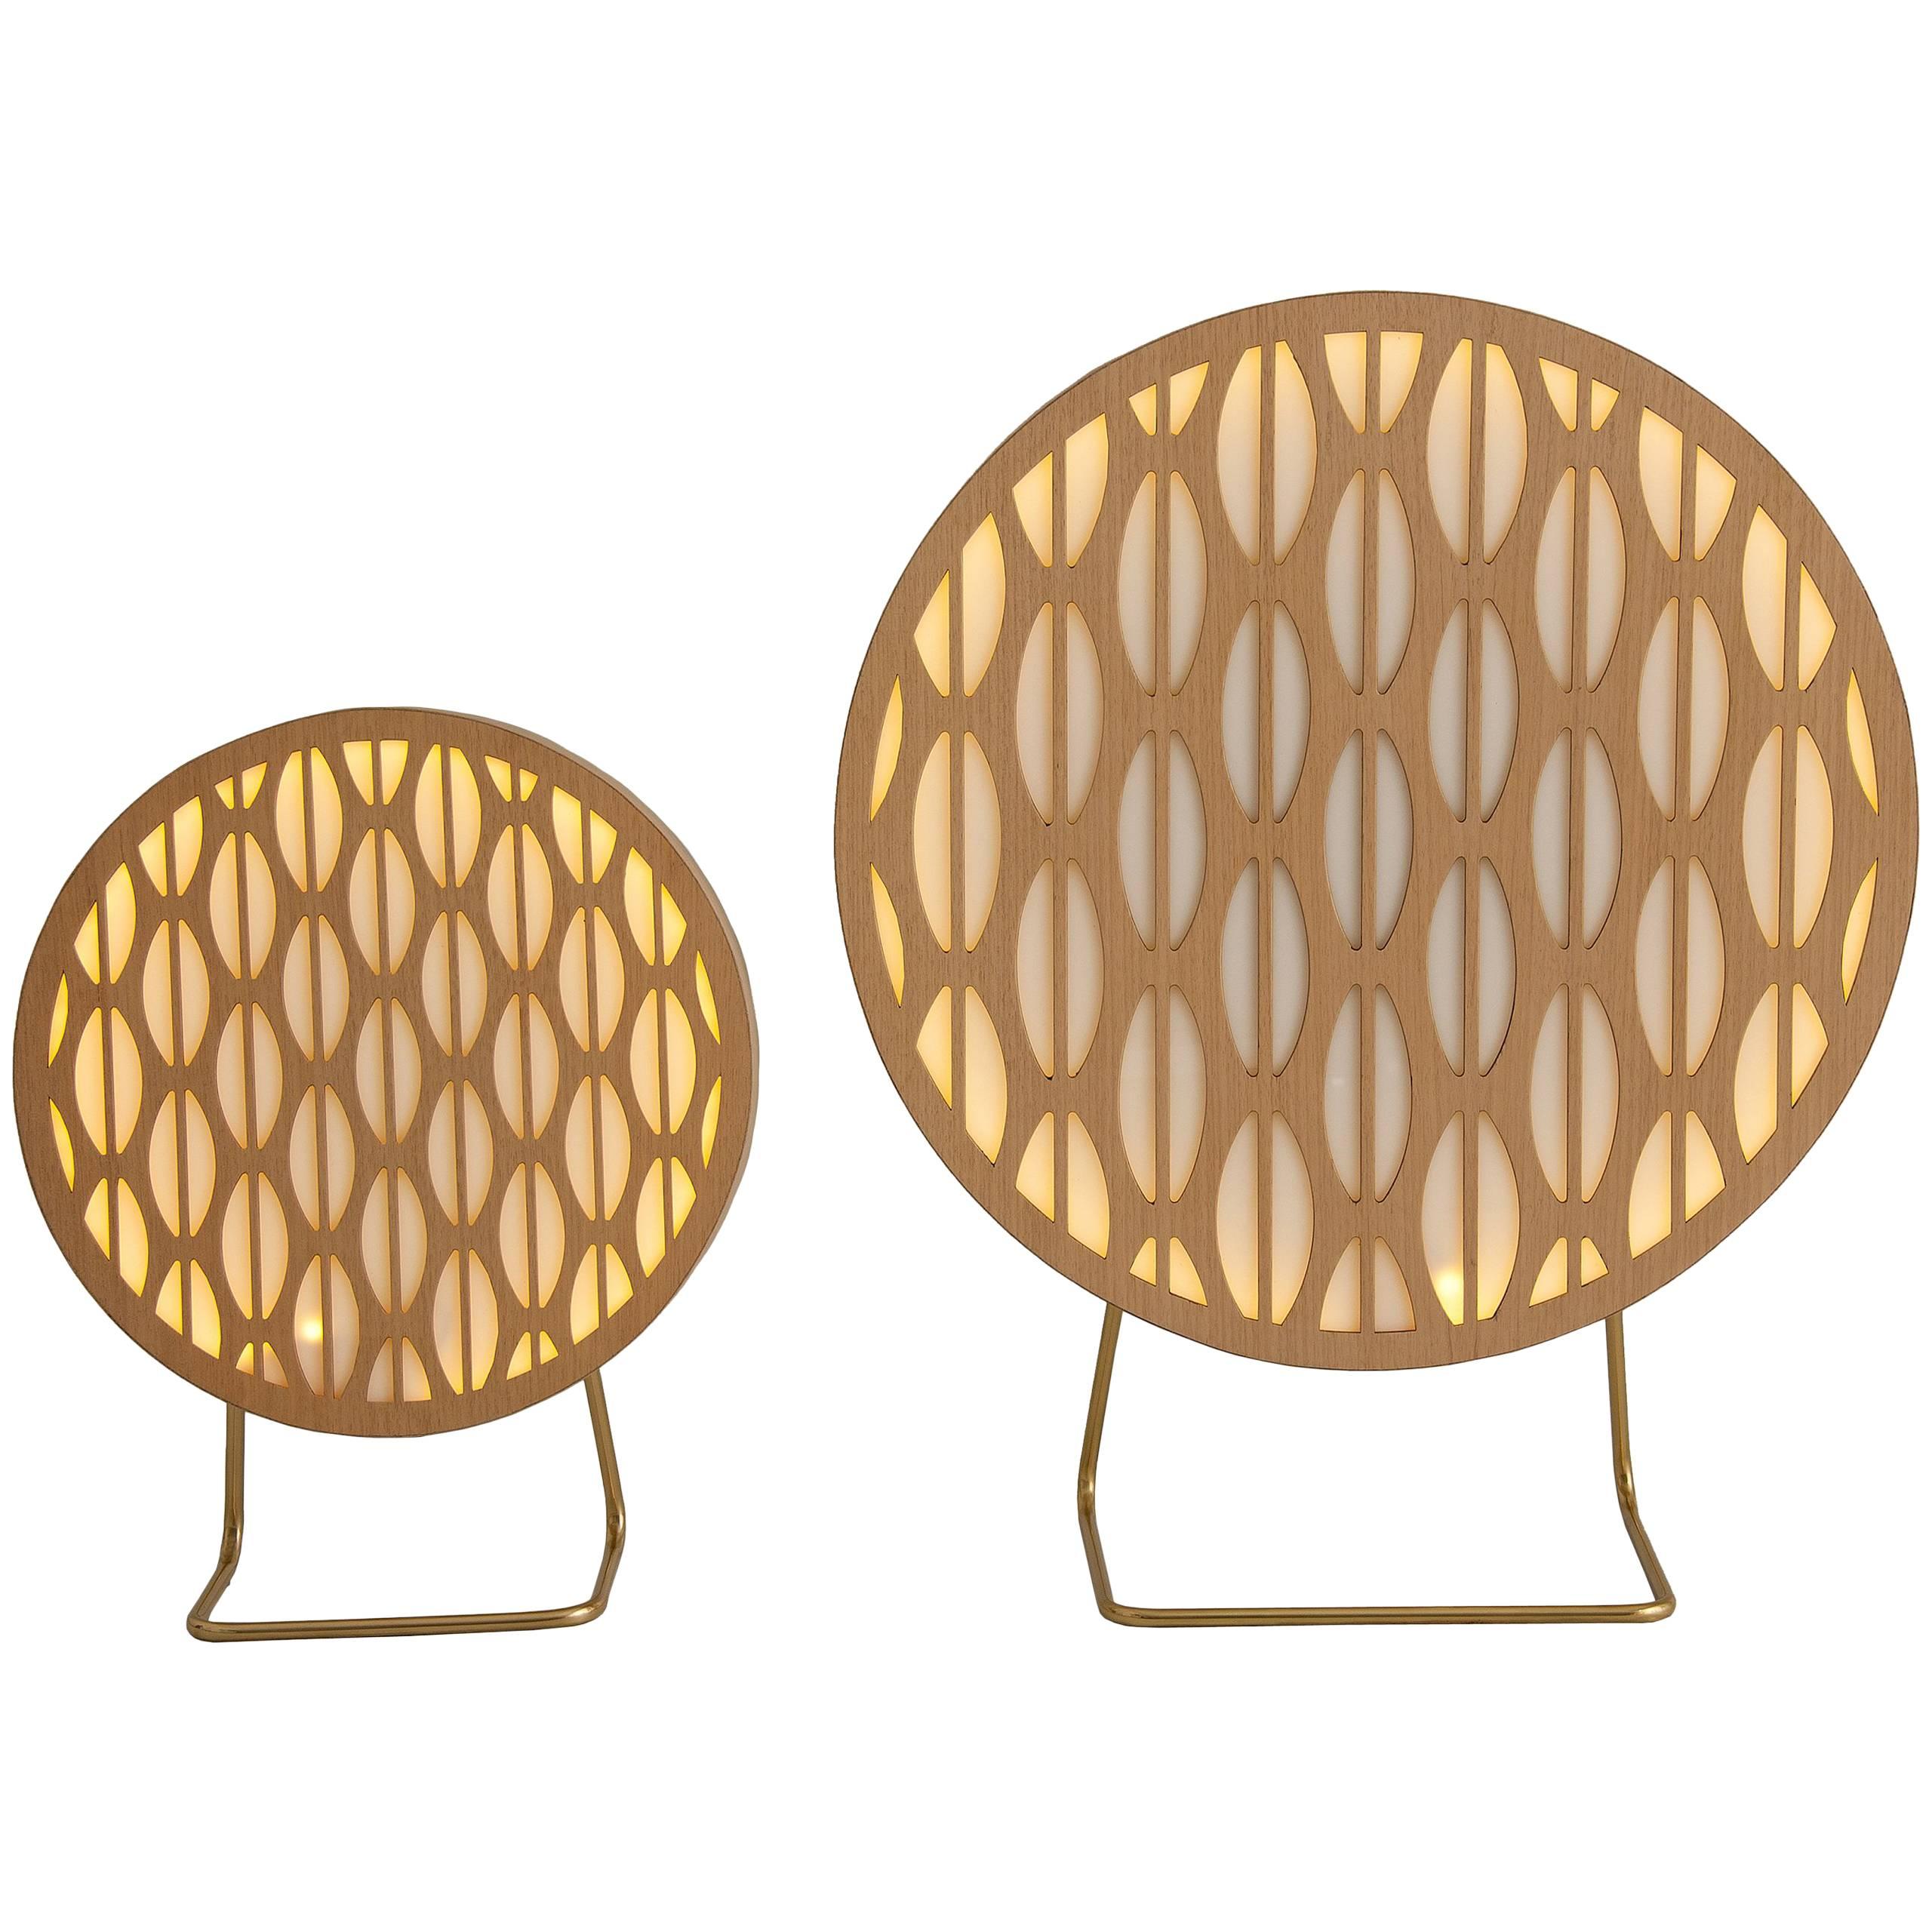 Big Pirulito Brazilian Contemporary Graphic Pattern Wood Table Lamp by Lattooga